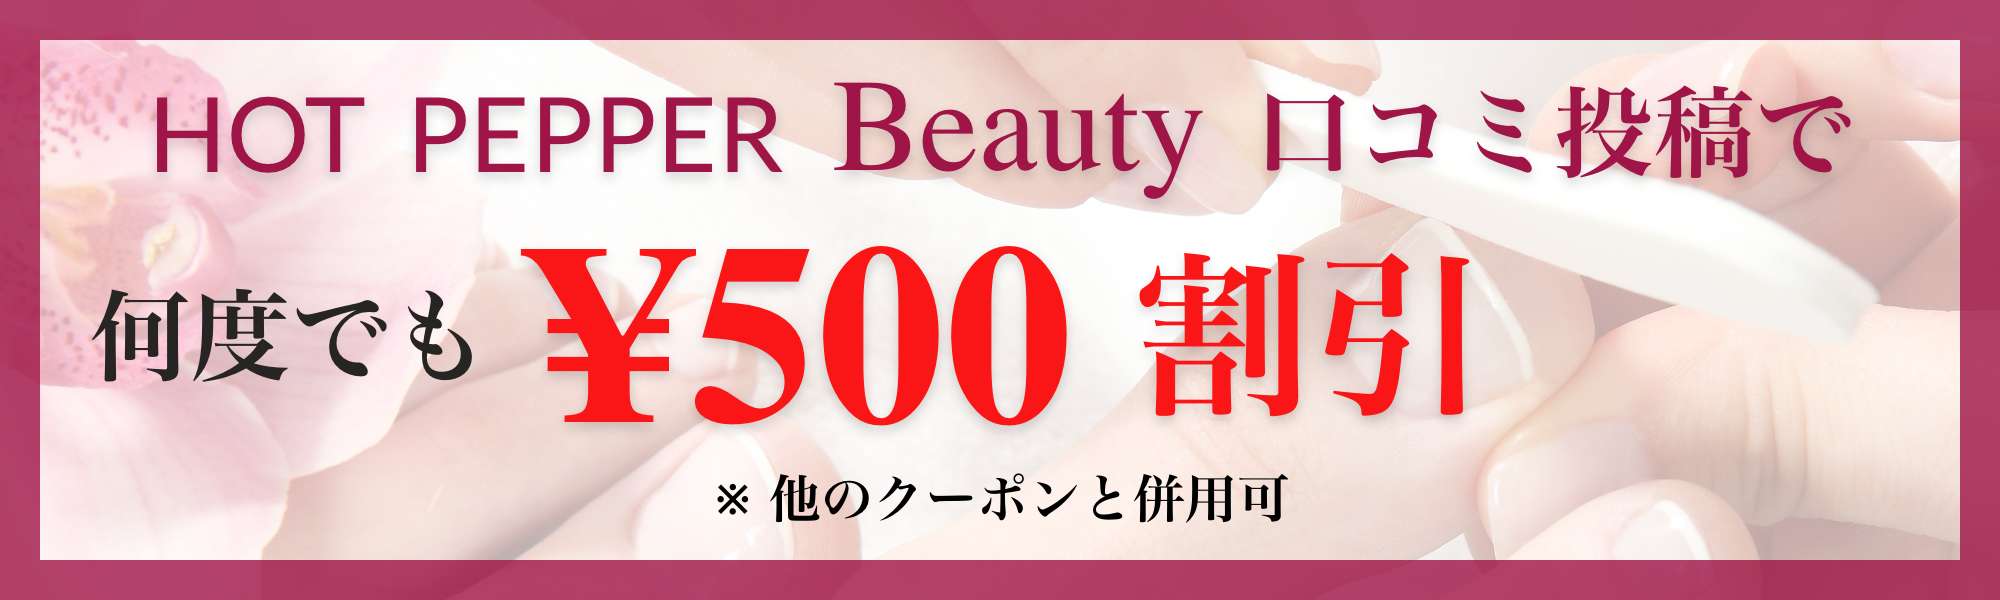 HOT PEPPER Beauty 口コミで¥500割引